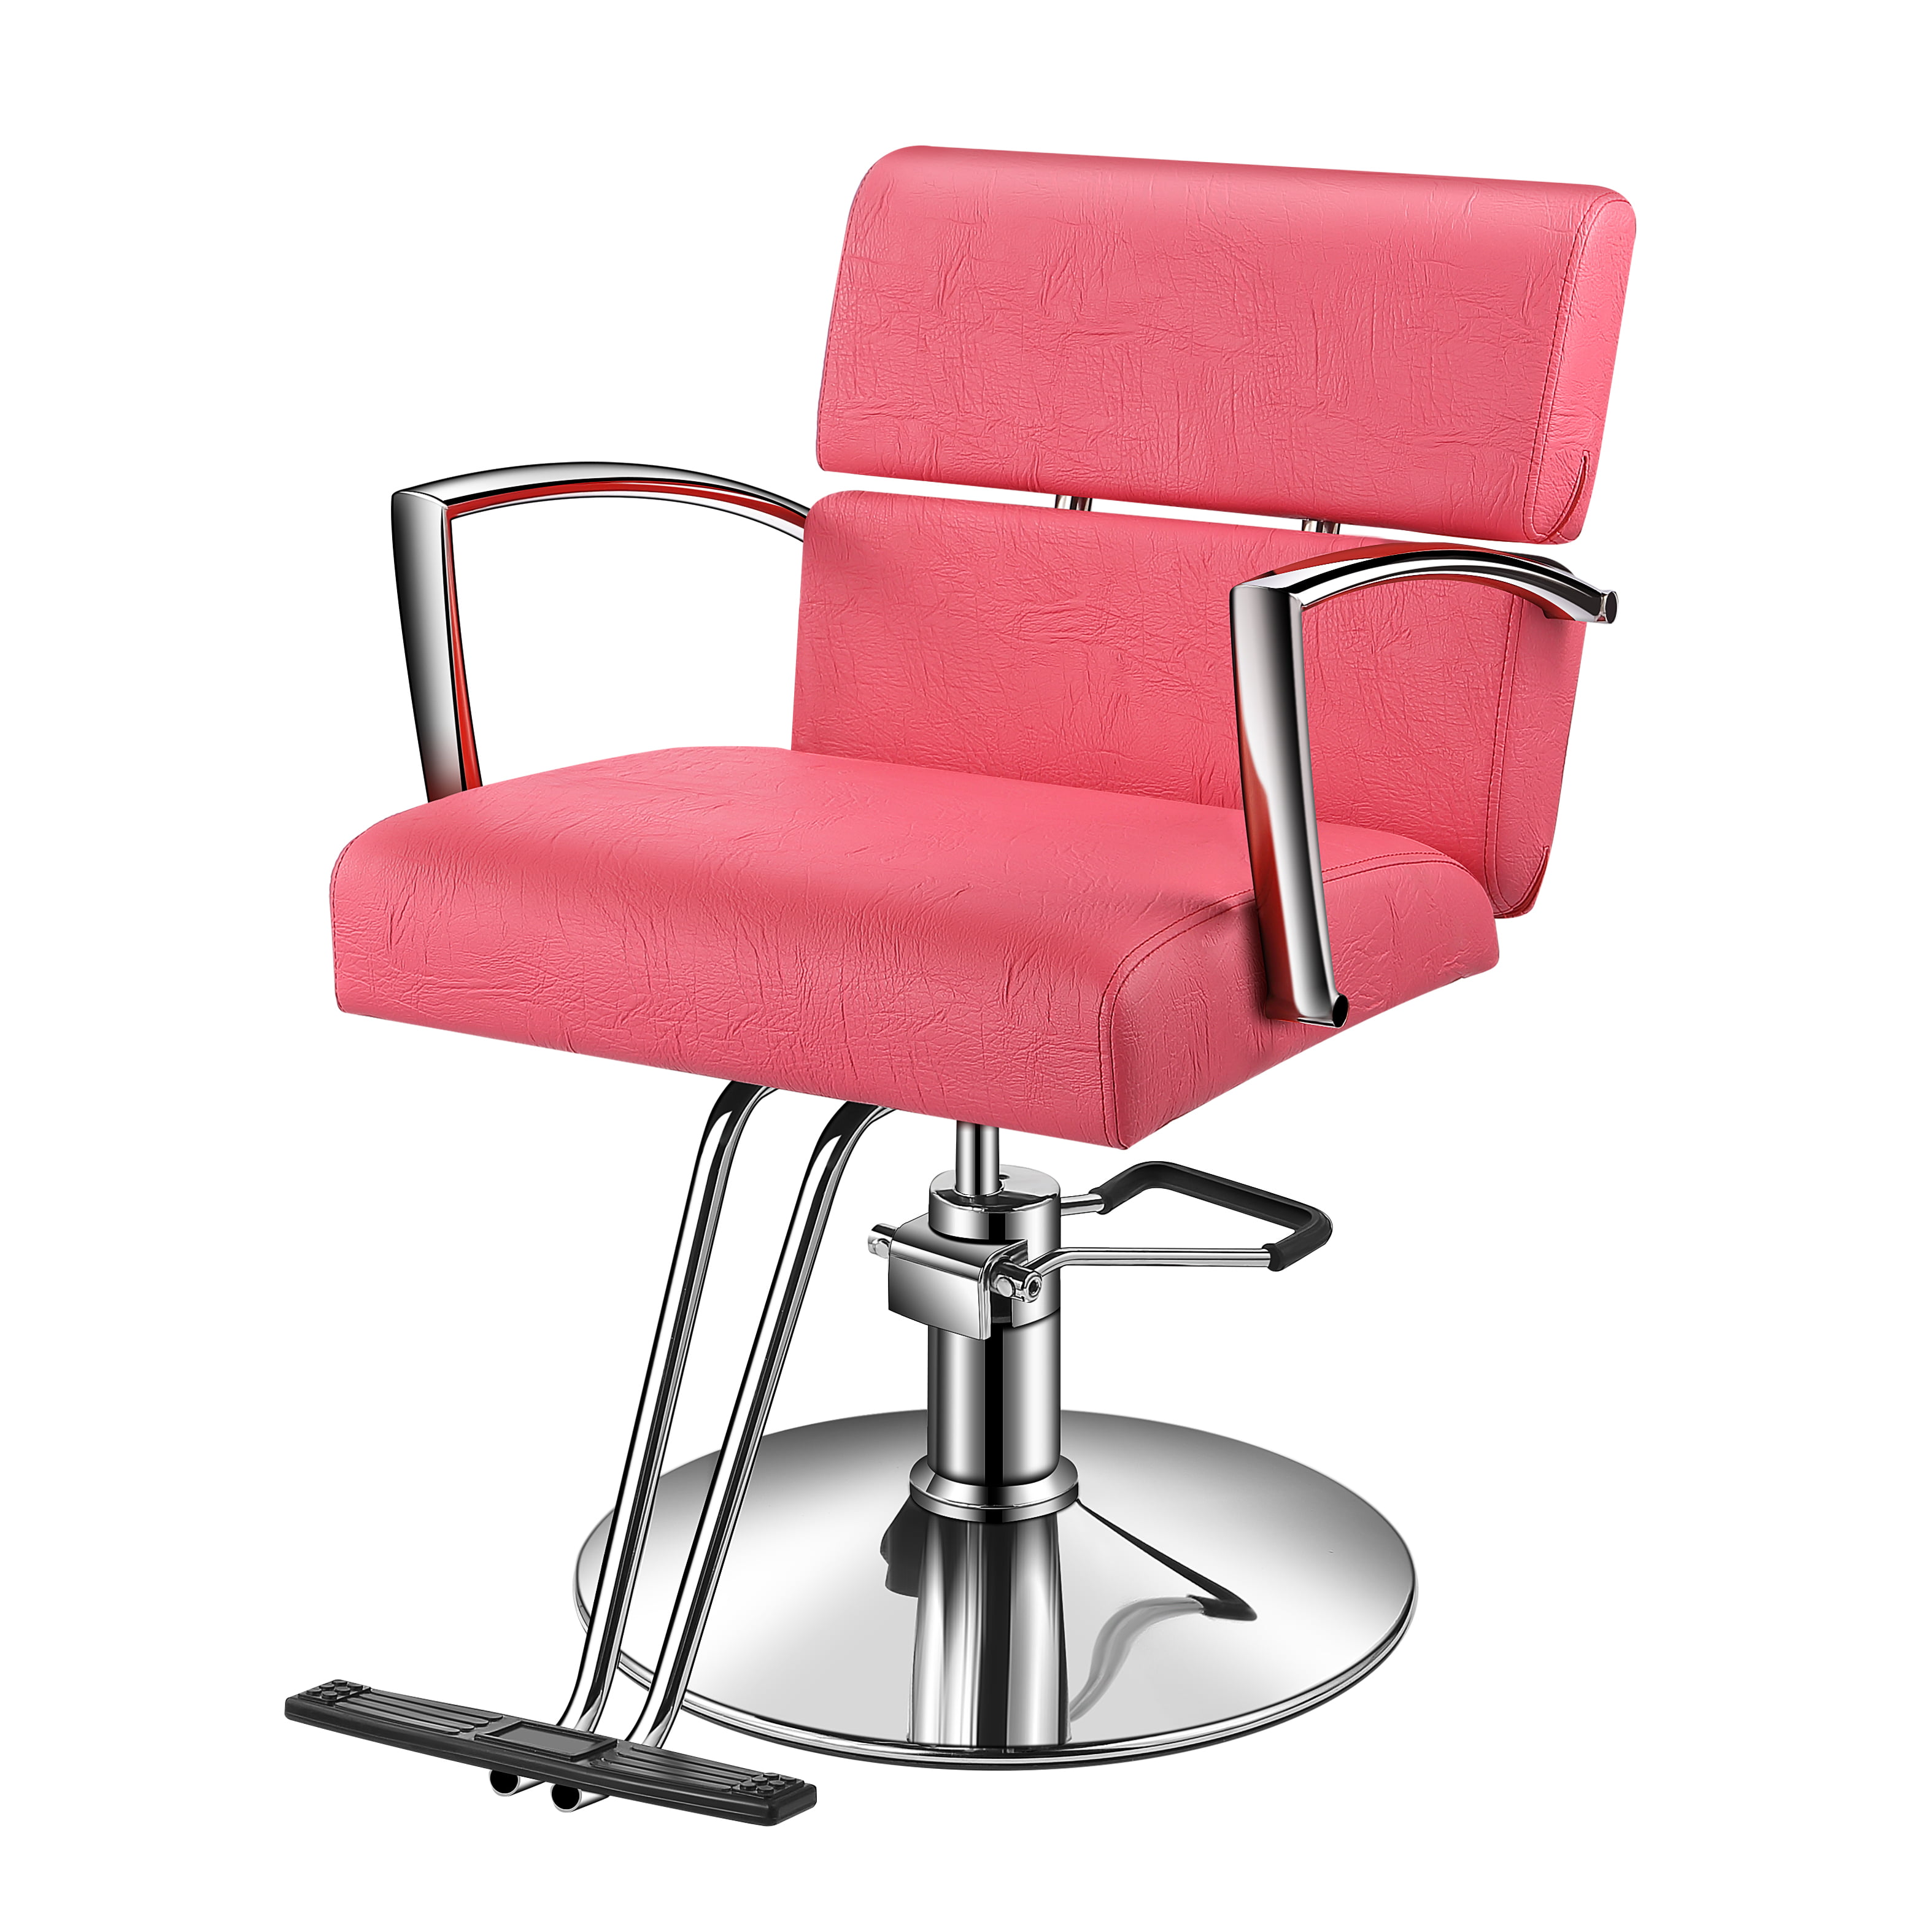 Baasha Modern Pink Salon  Chairs  For Hair Stylist With 